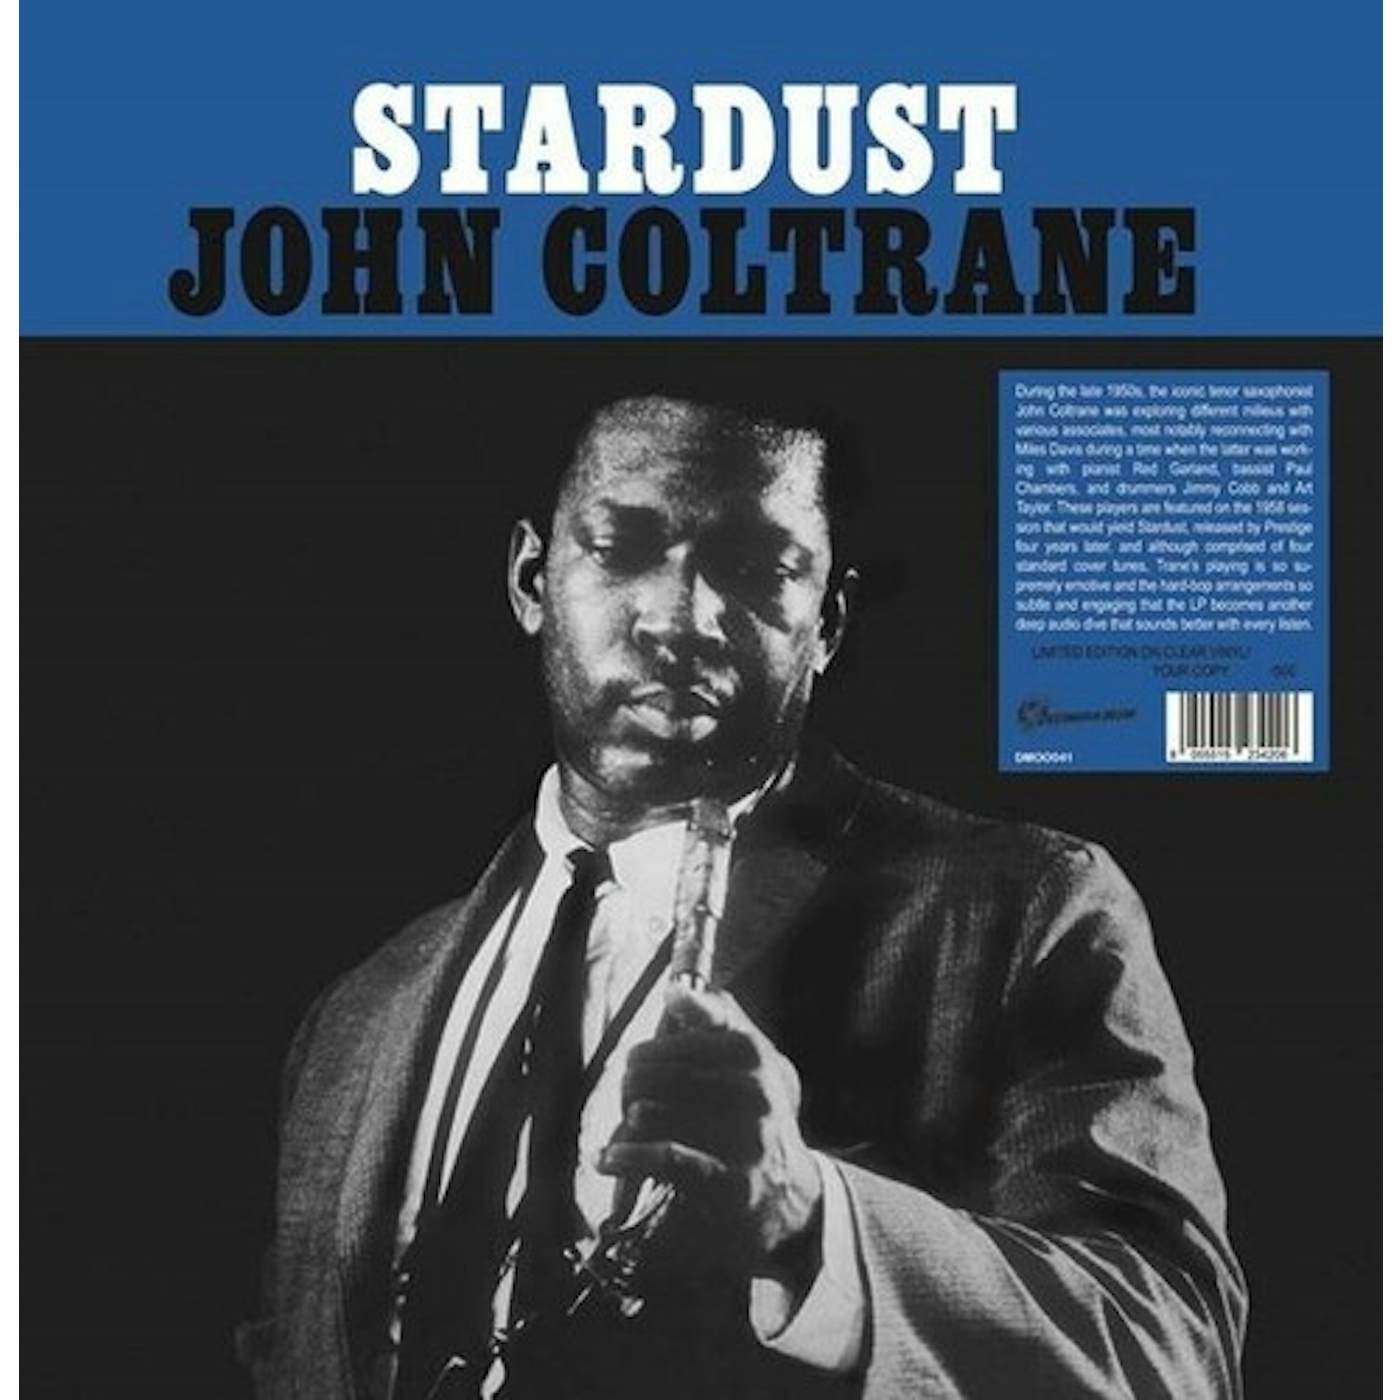 John Coltrane STARDUST Vinyl Record